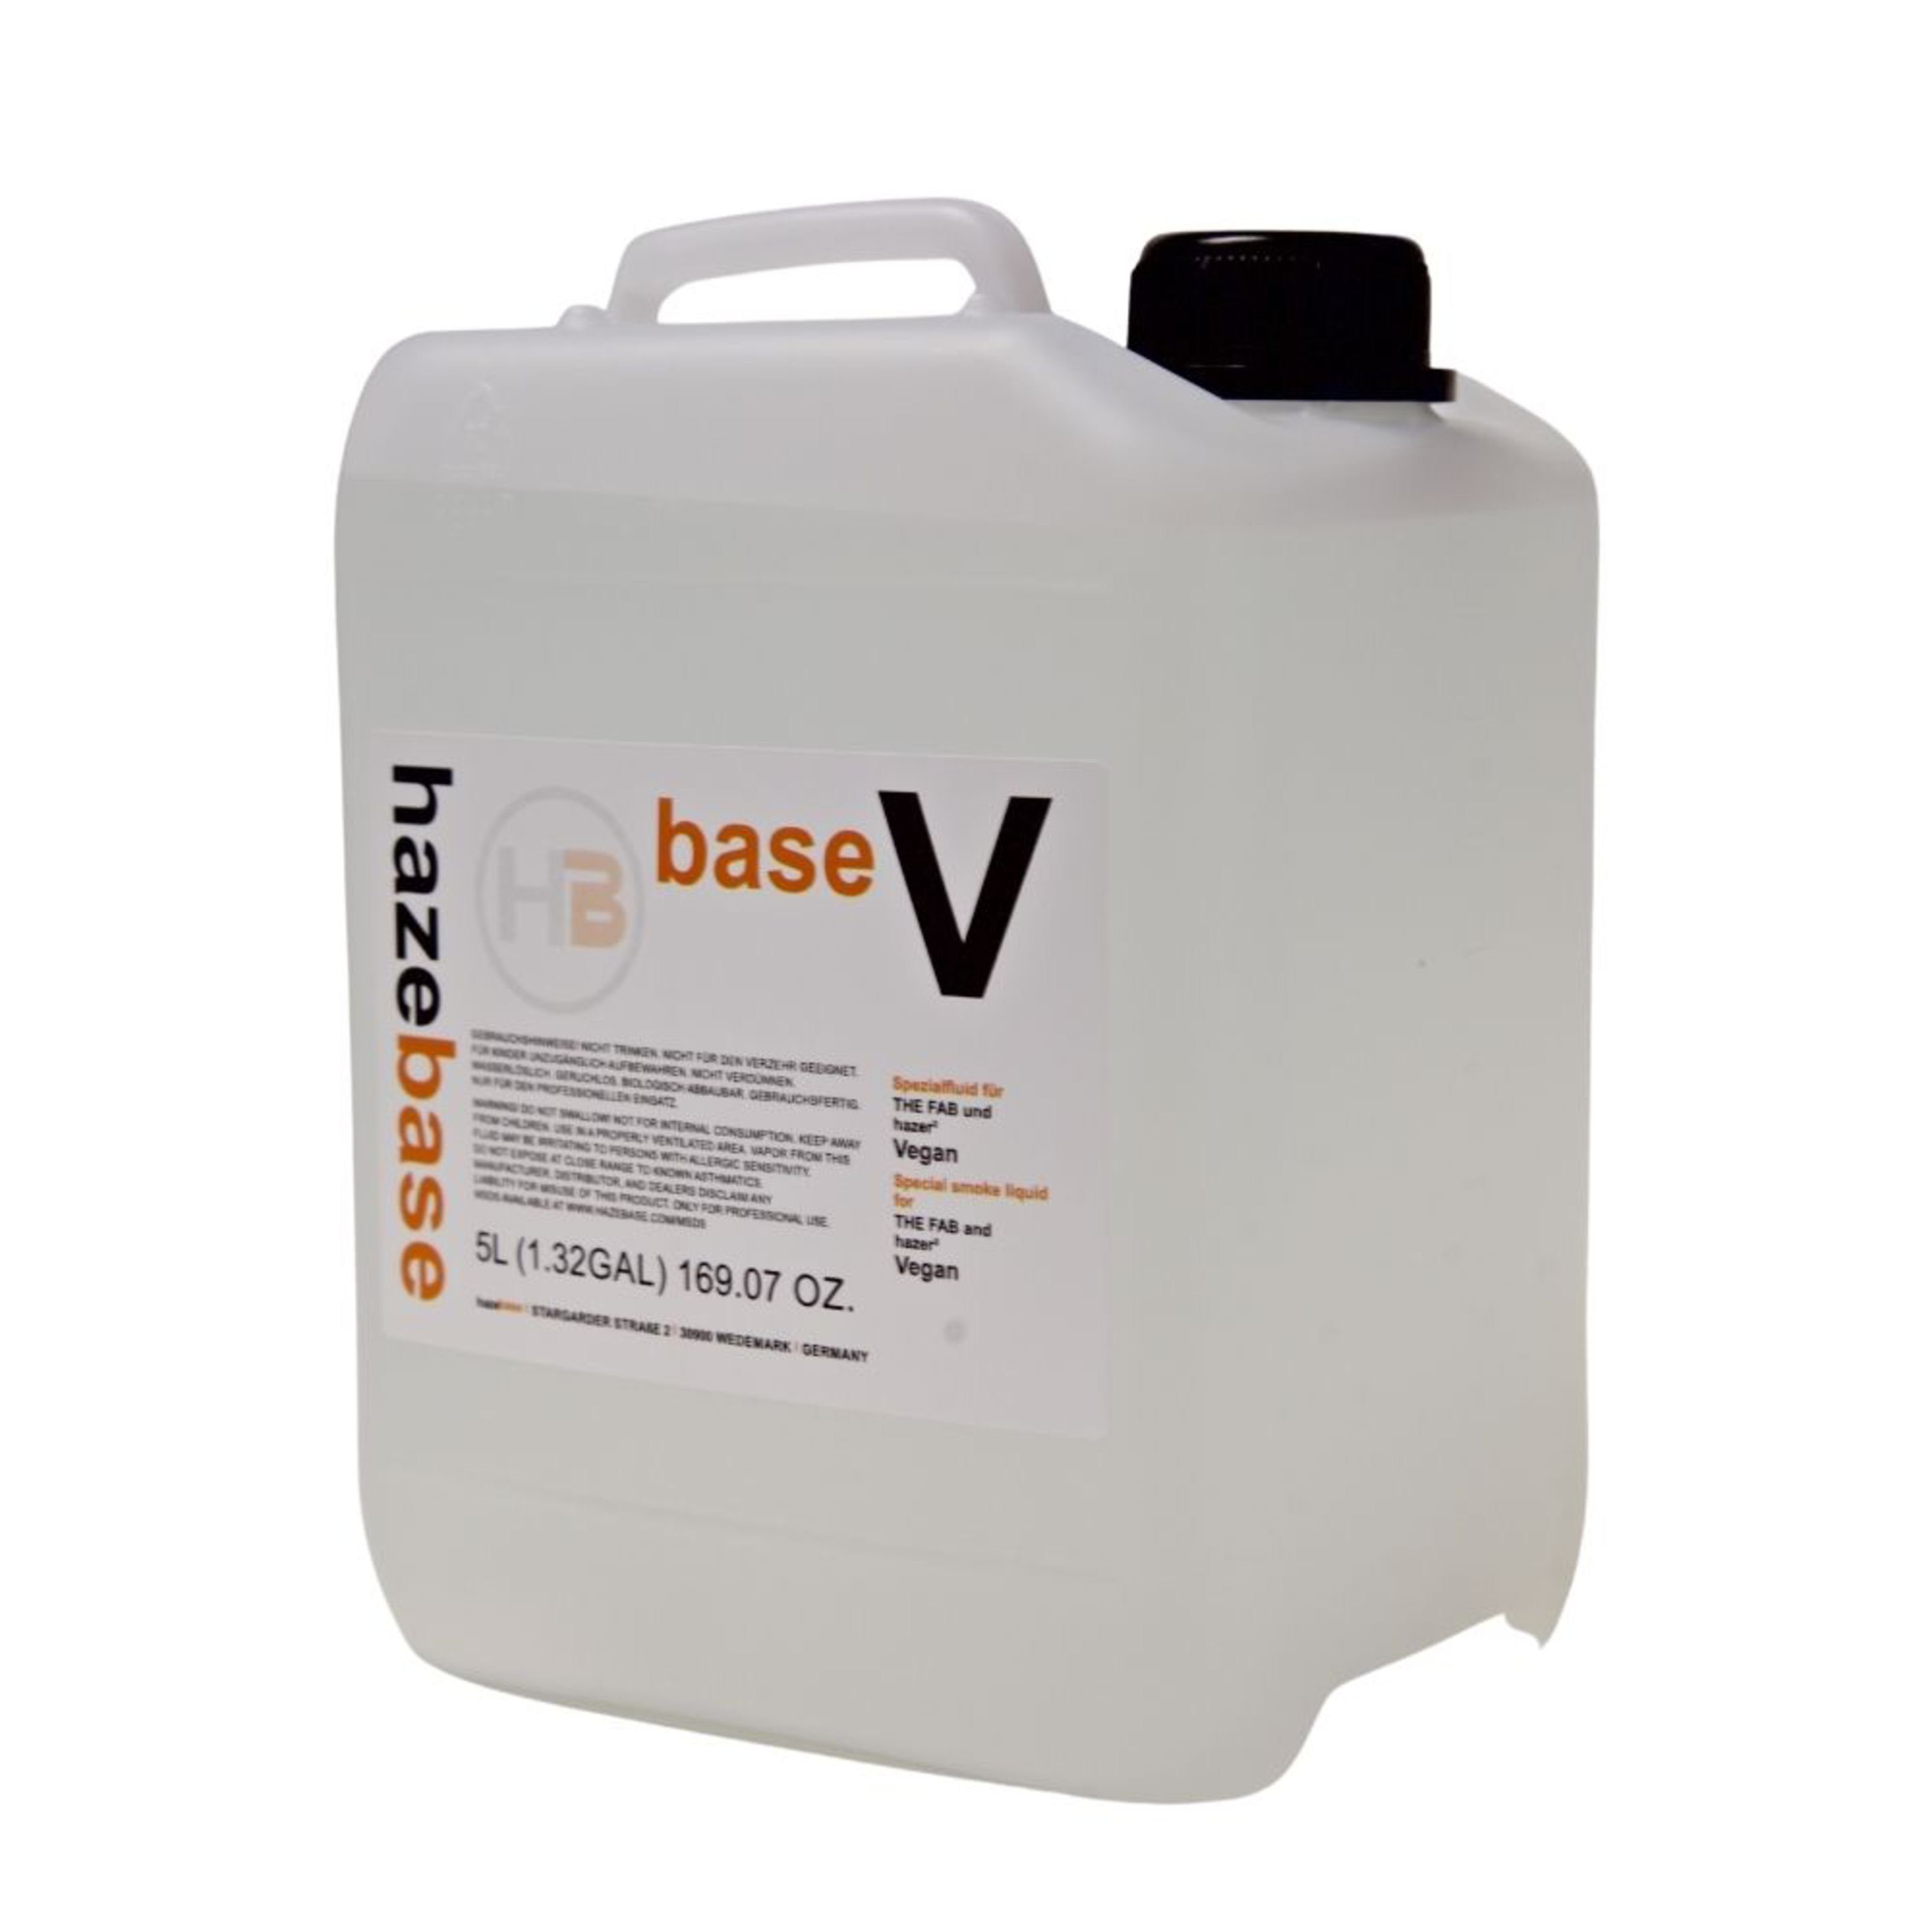 5L Discolicht, base*V hazebase Hazerfl. hazer liquid, Fluid -